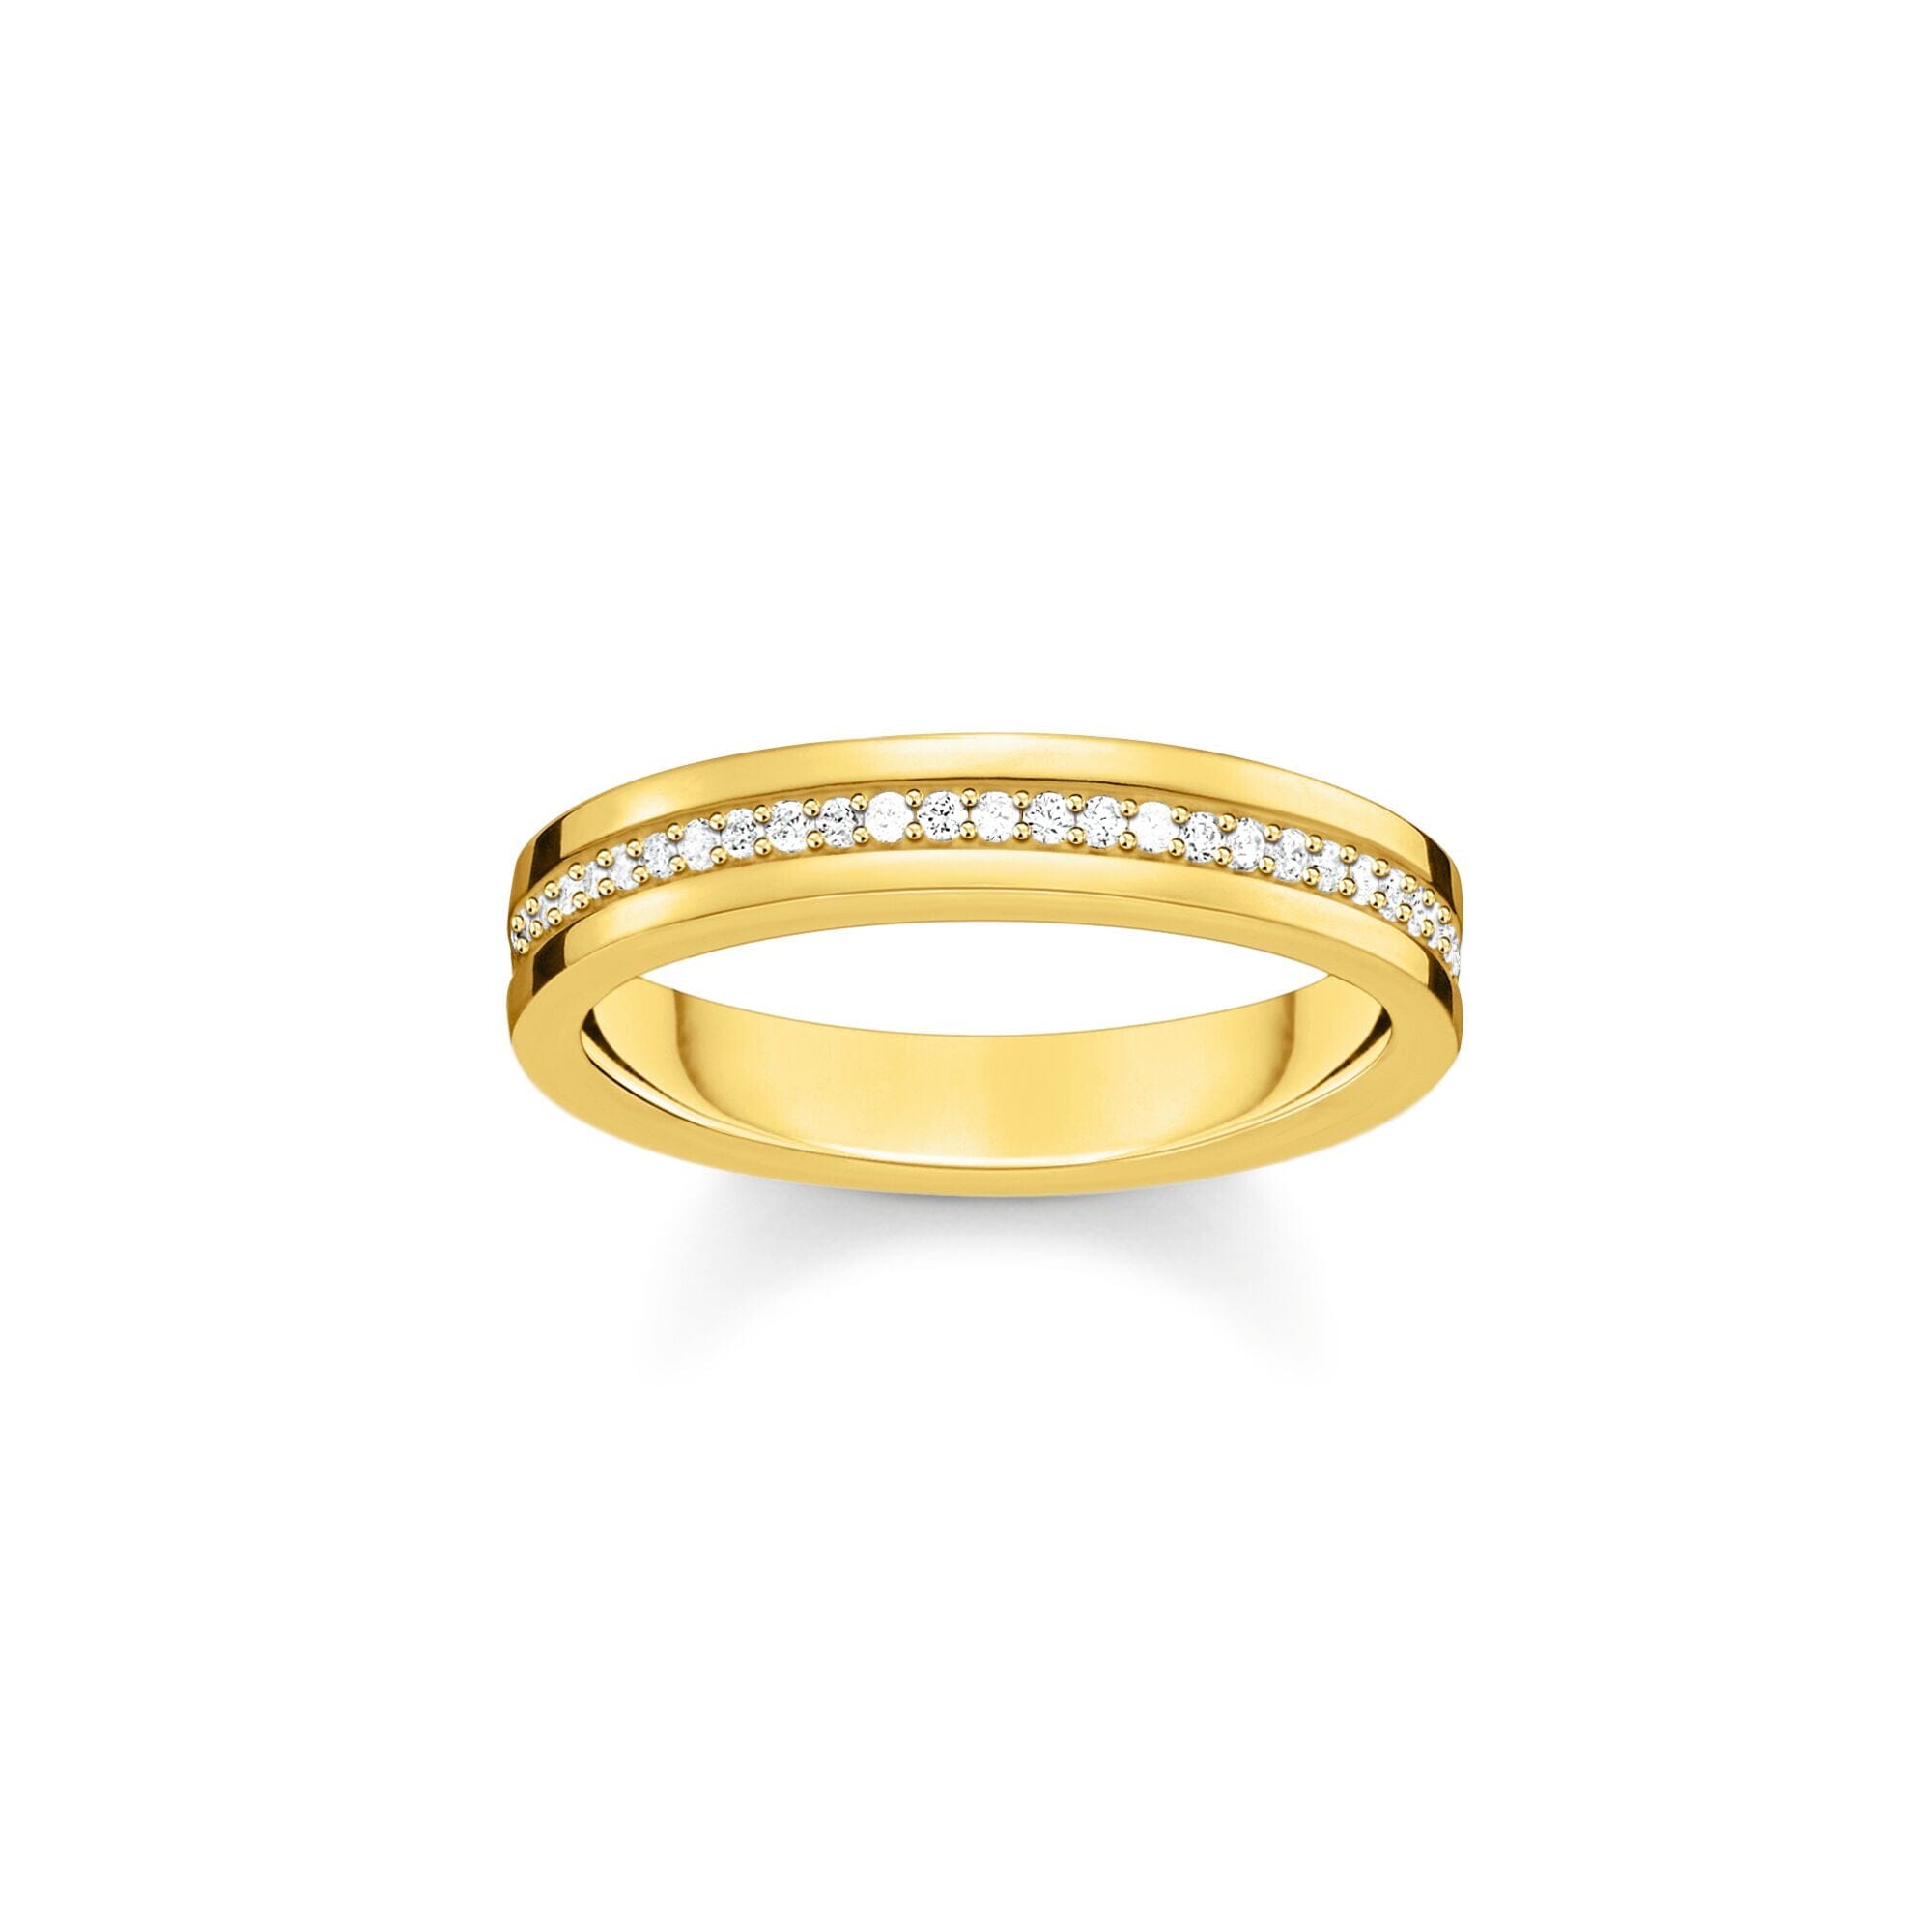 THOMAS SABO Golden Band Ring with White Zirconia Rings Thomas Sabo 